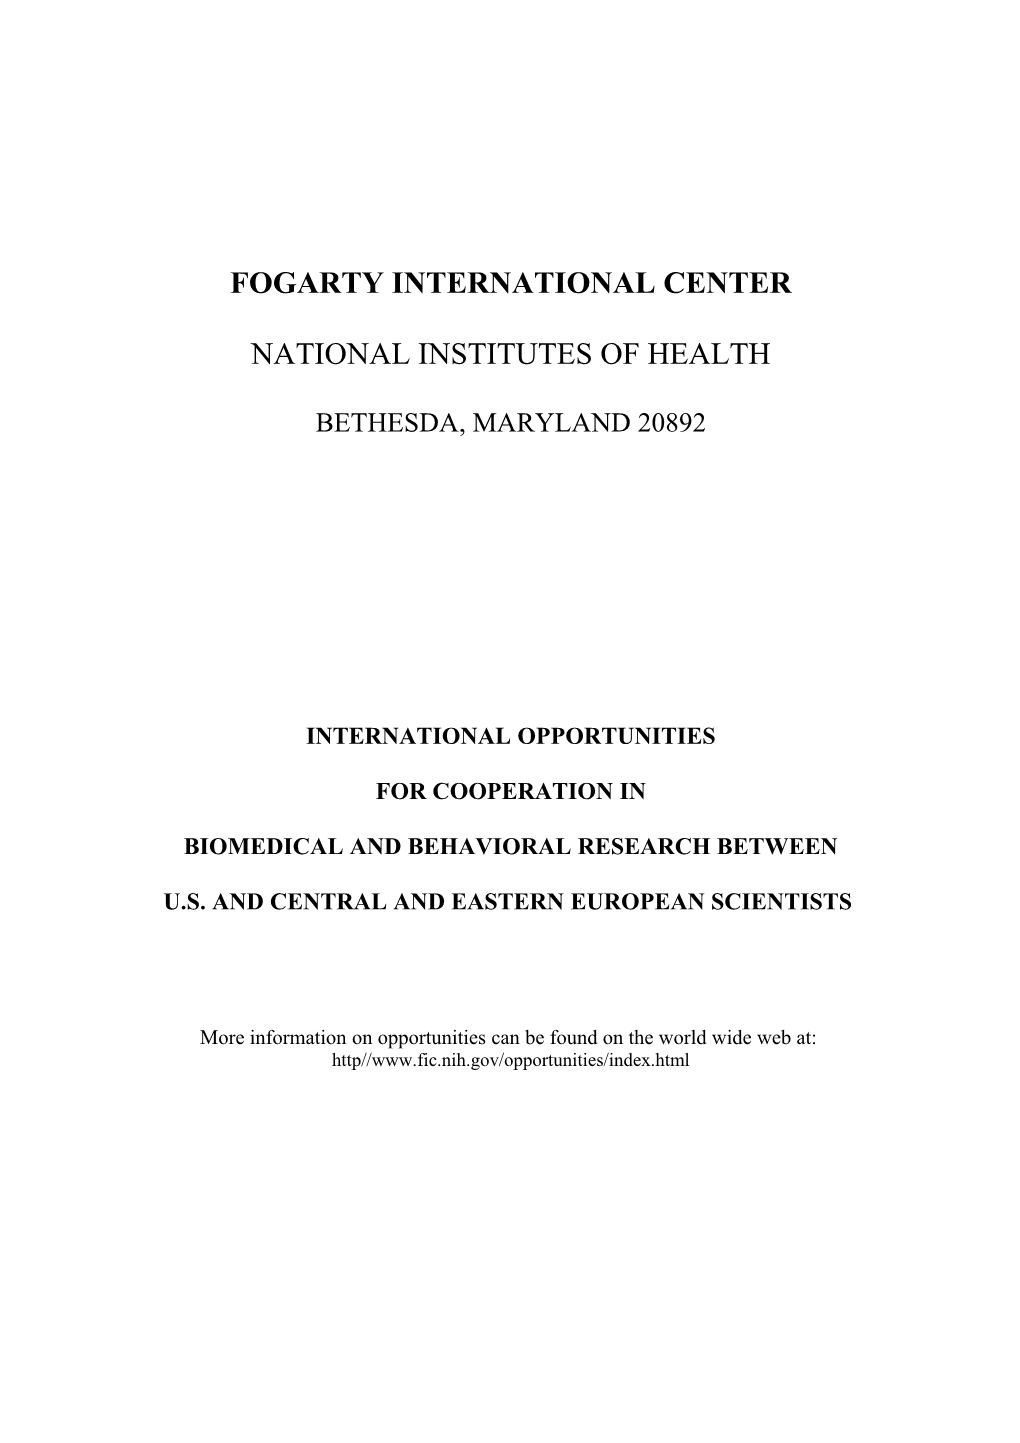 Fogarty International Center